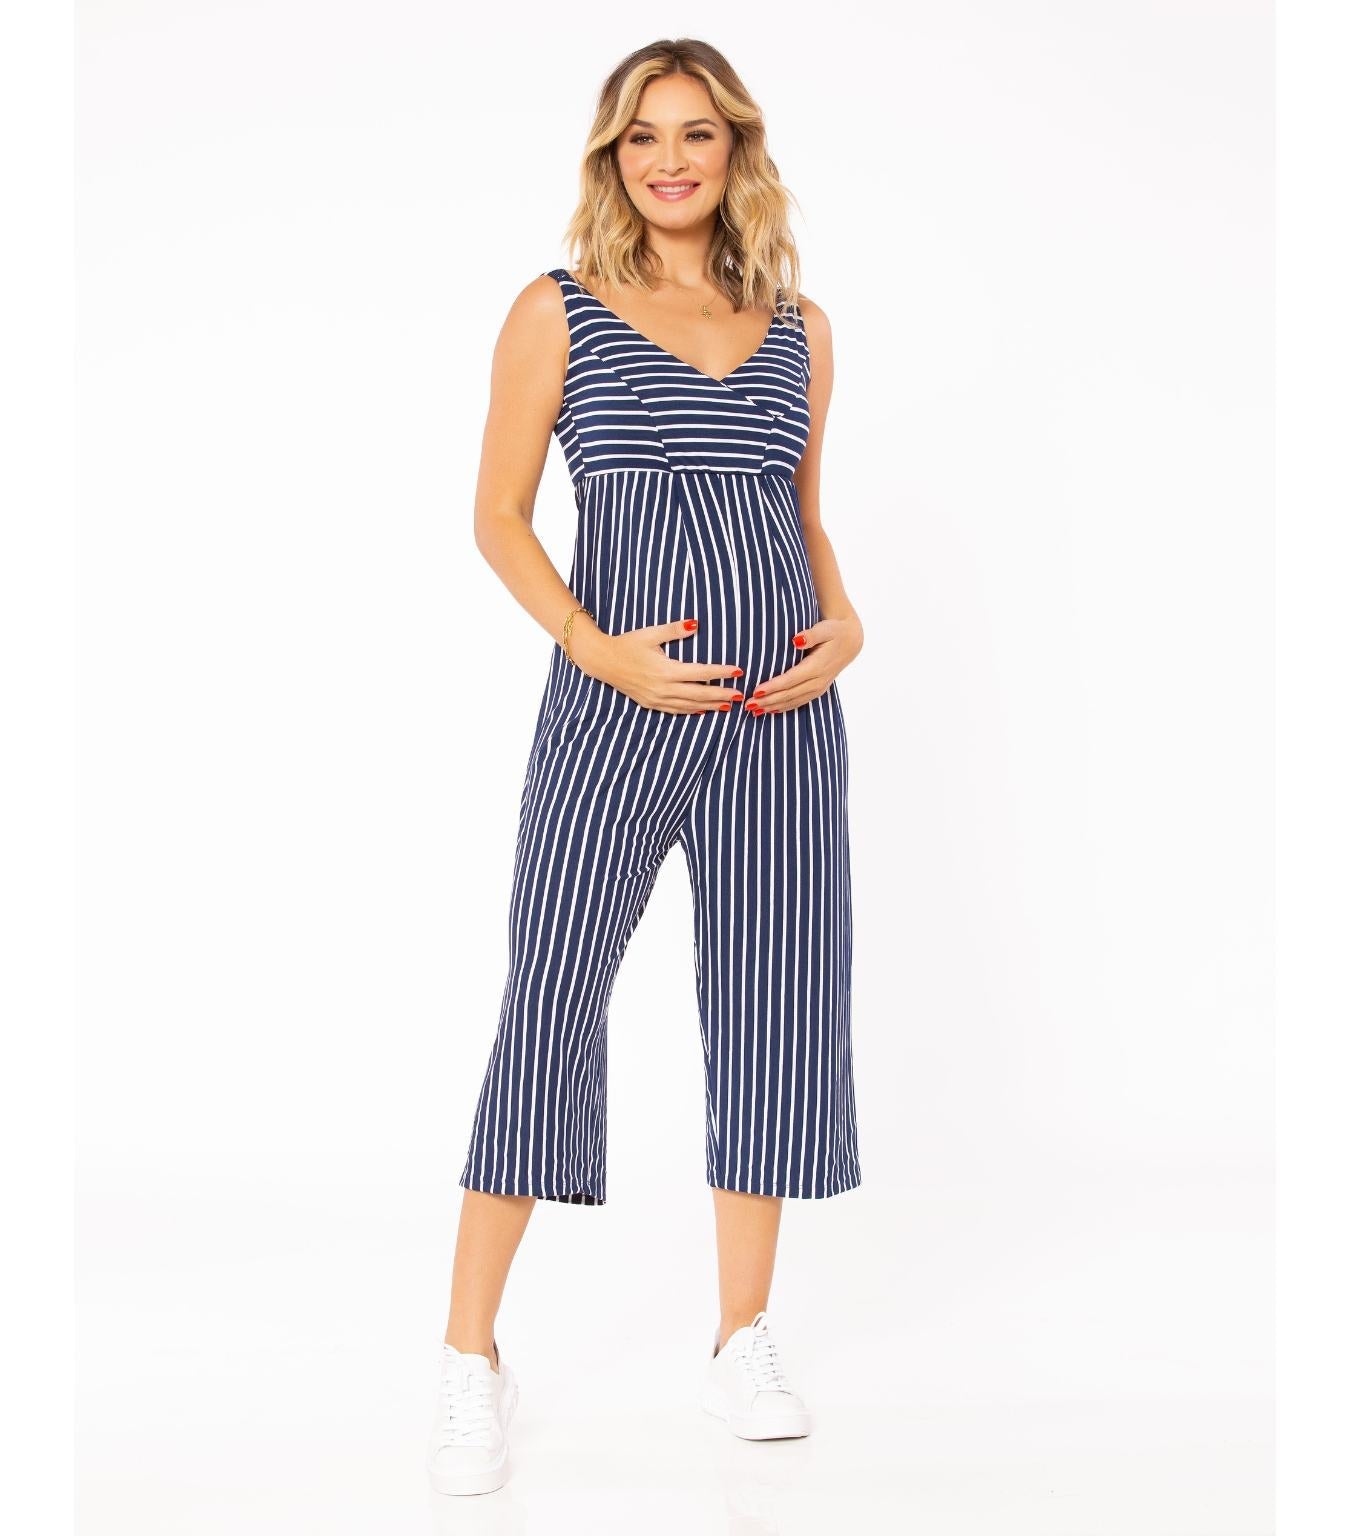 Maternity Pantacourt Jumpsuit with Nursing Top - Navy Blue